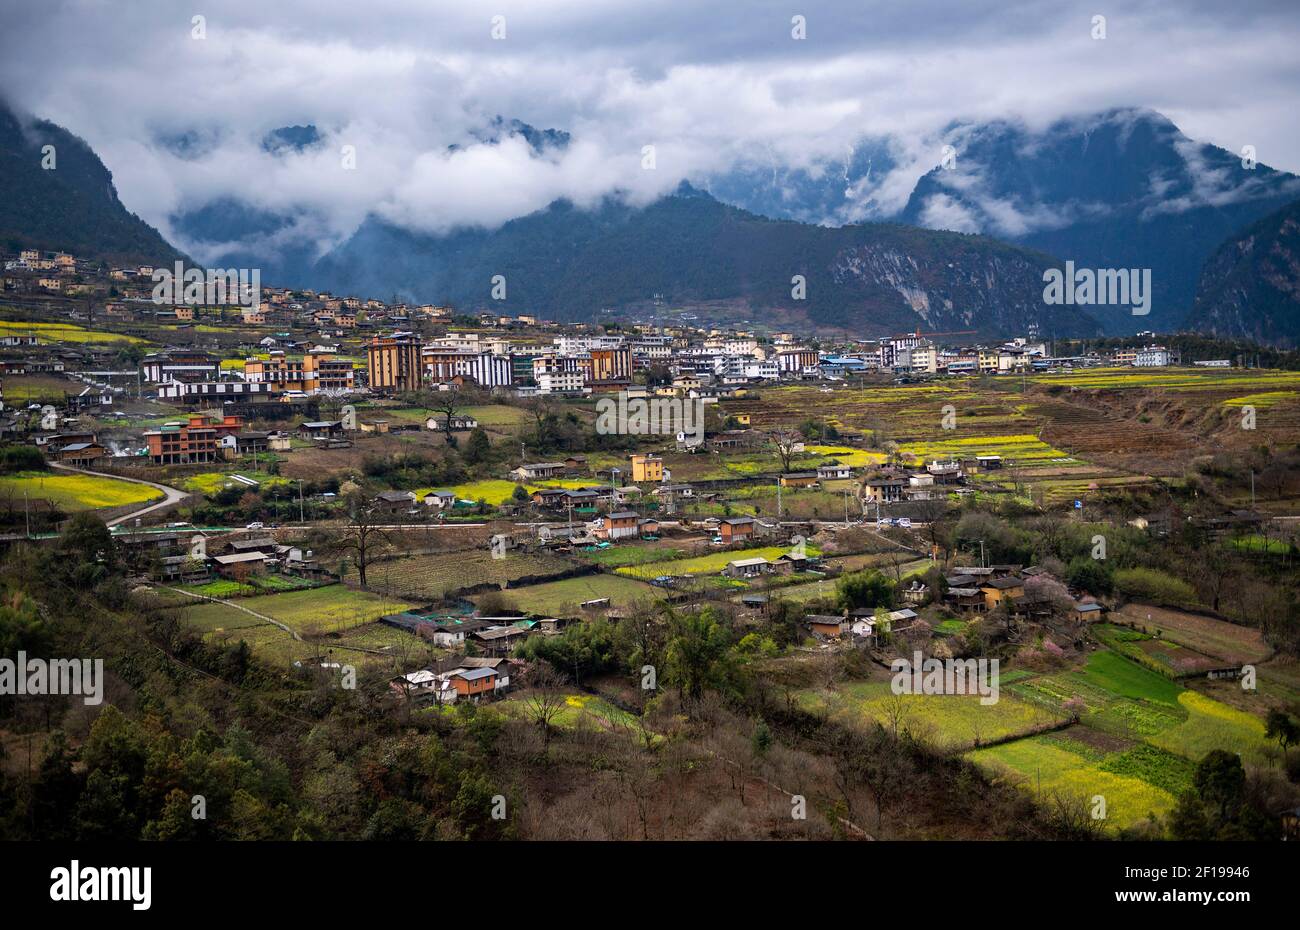 Gongshan. 7th Mar, 2021. Photo taken on March 7, 2021 shows the scenery of Bingzhongluo Township in Lisu Autonomous Prefecture of Nujiang, southwest China's Yunnan Province. Credit: Chen Xinbo/Xinhua/Alamy Live News Stock Photo